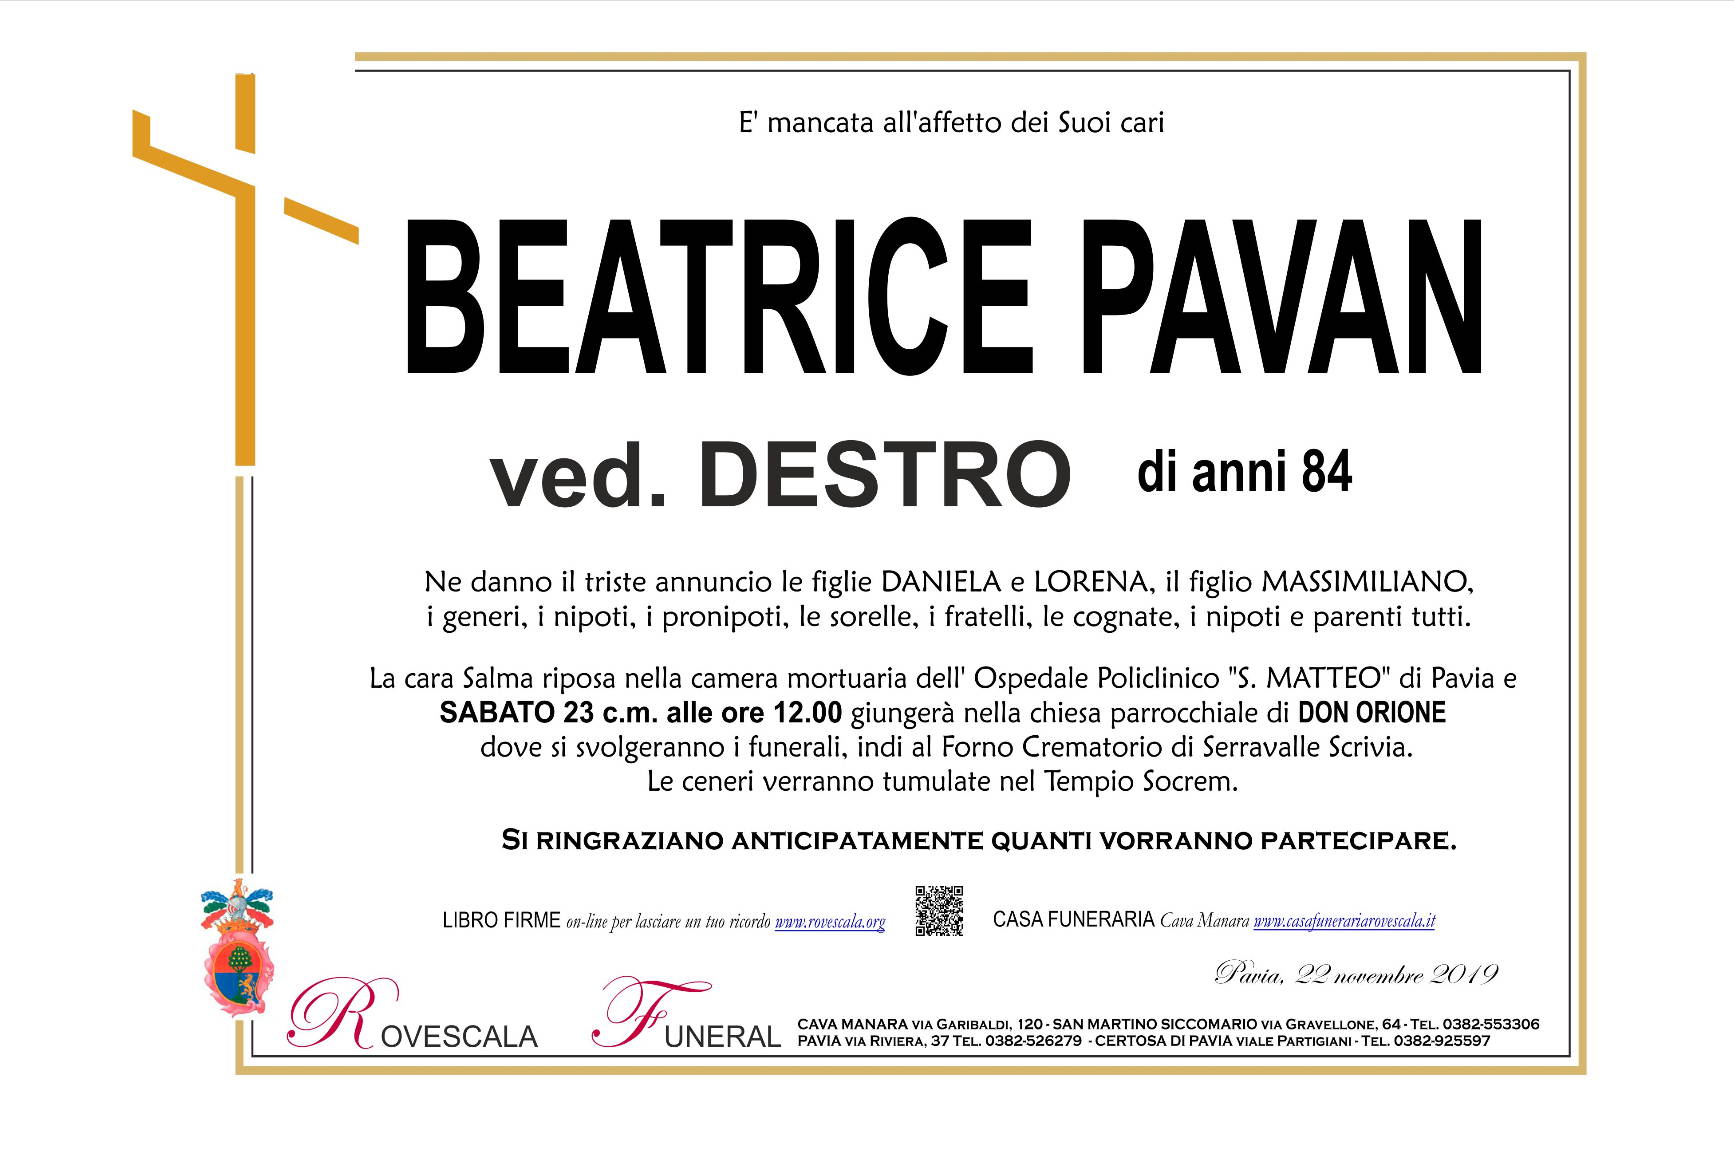 Beatrice Pavan